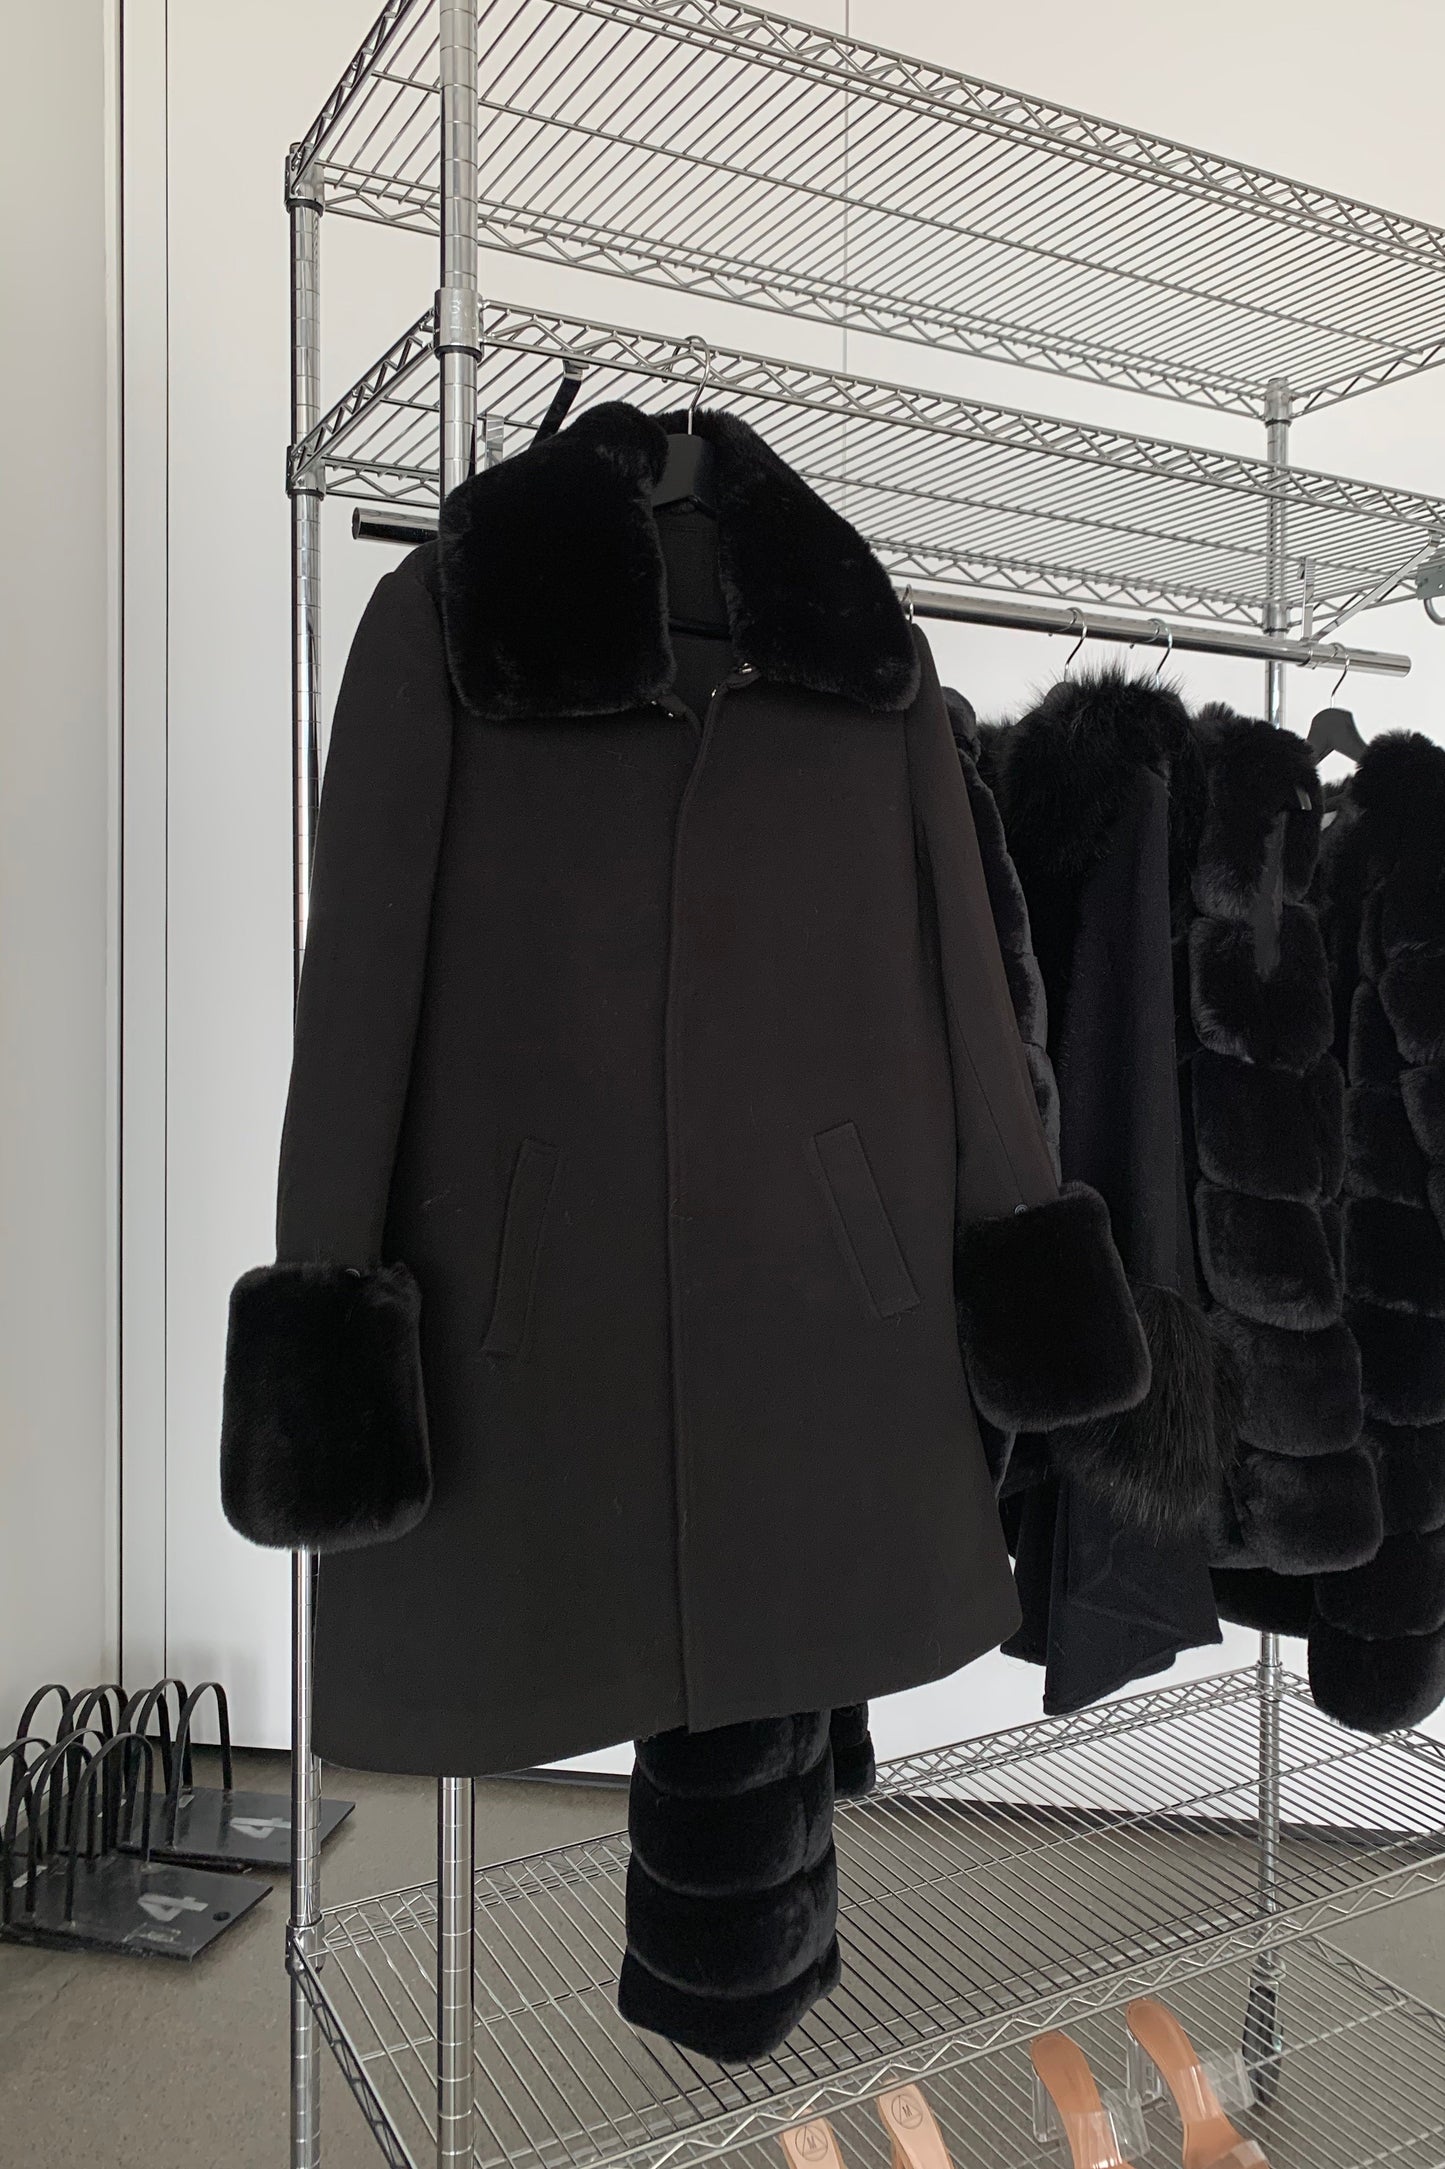 Sarah Faux Fur Jacket Long Black - Sample